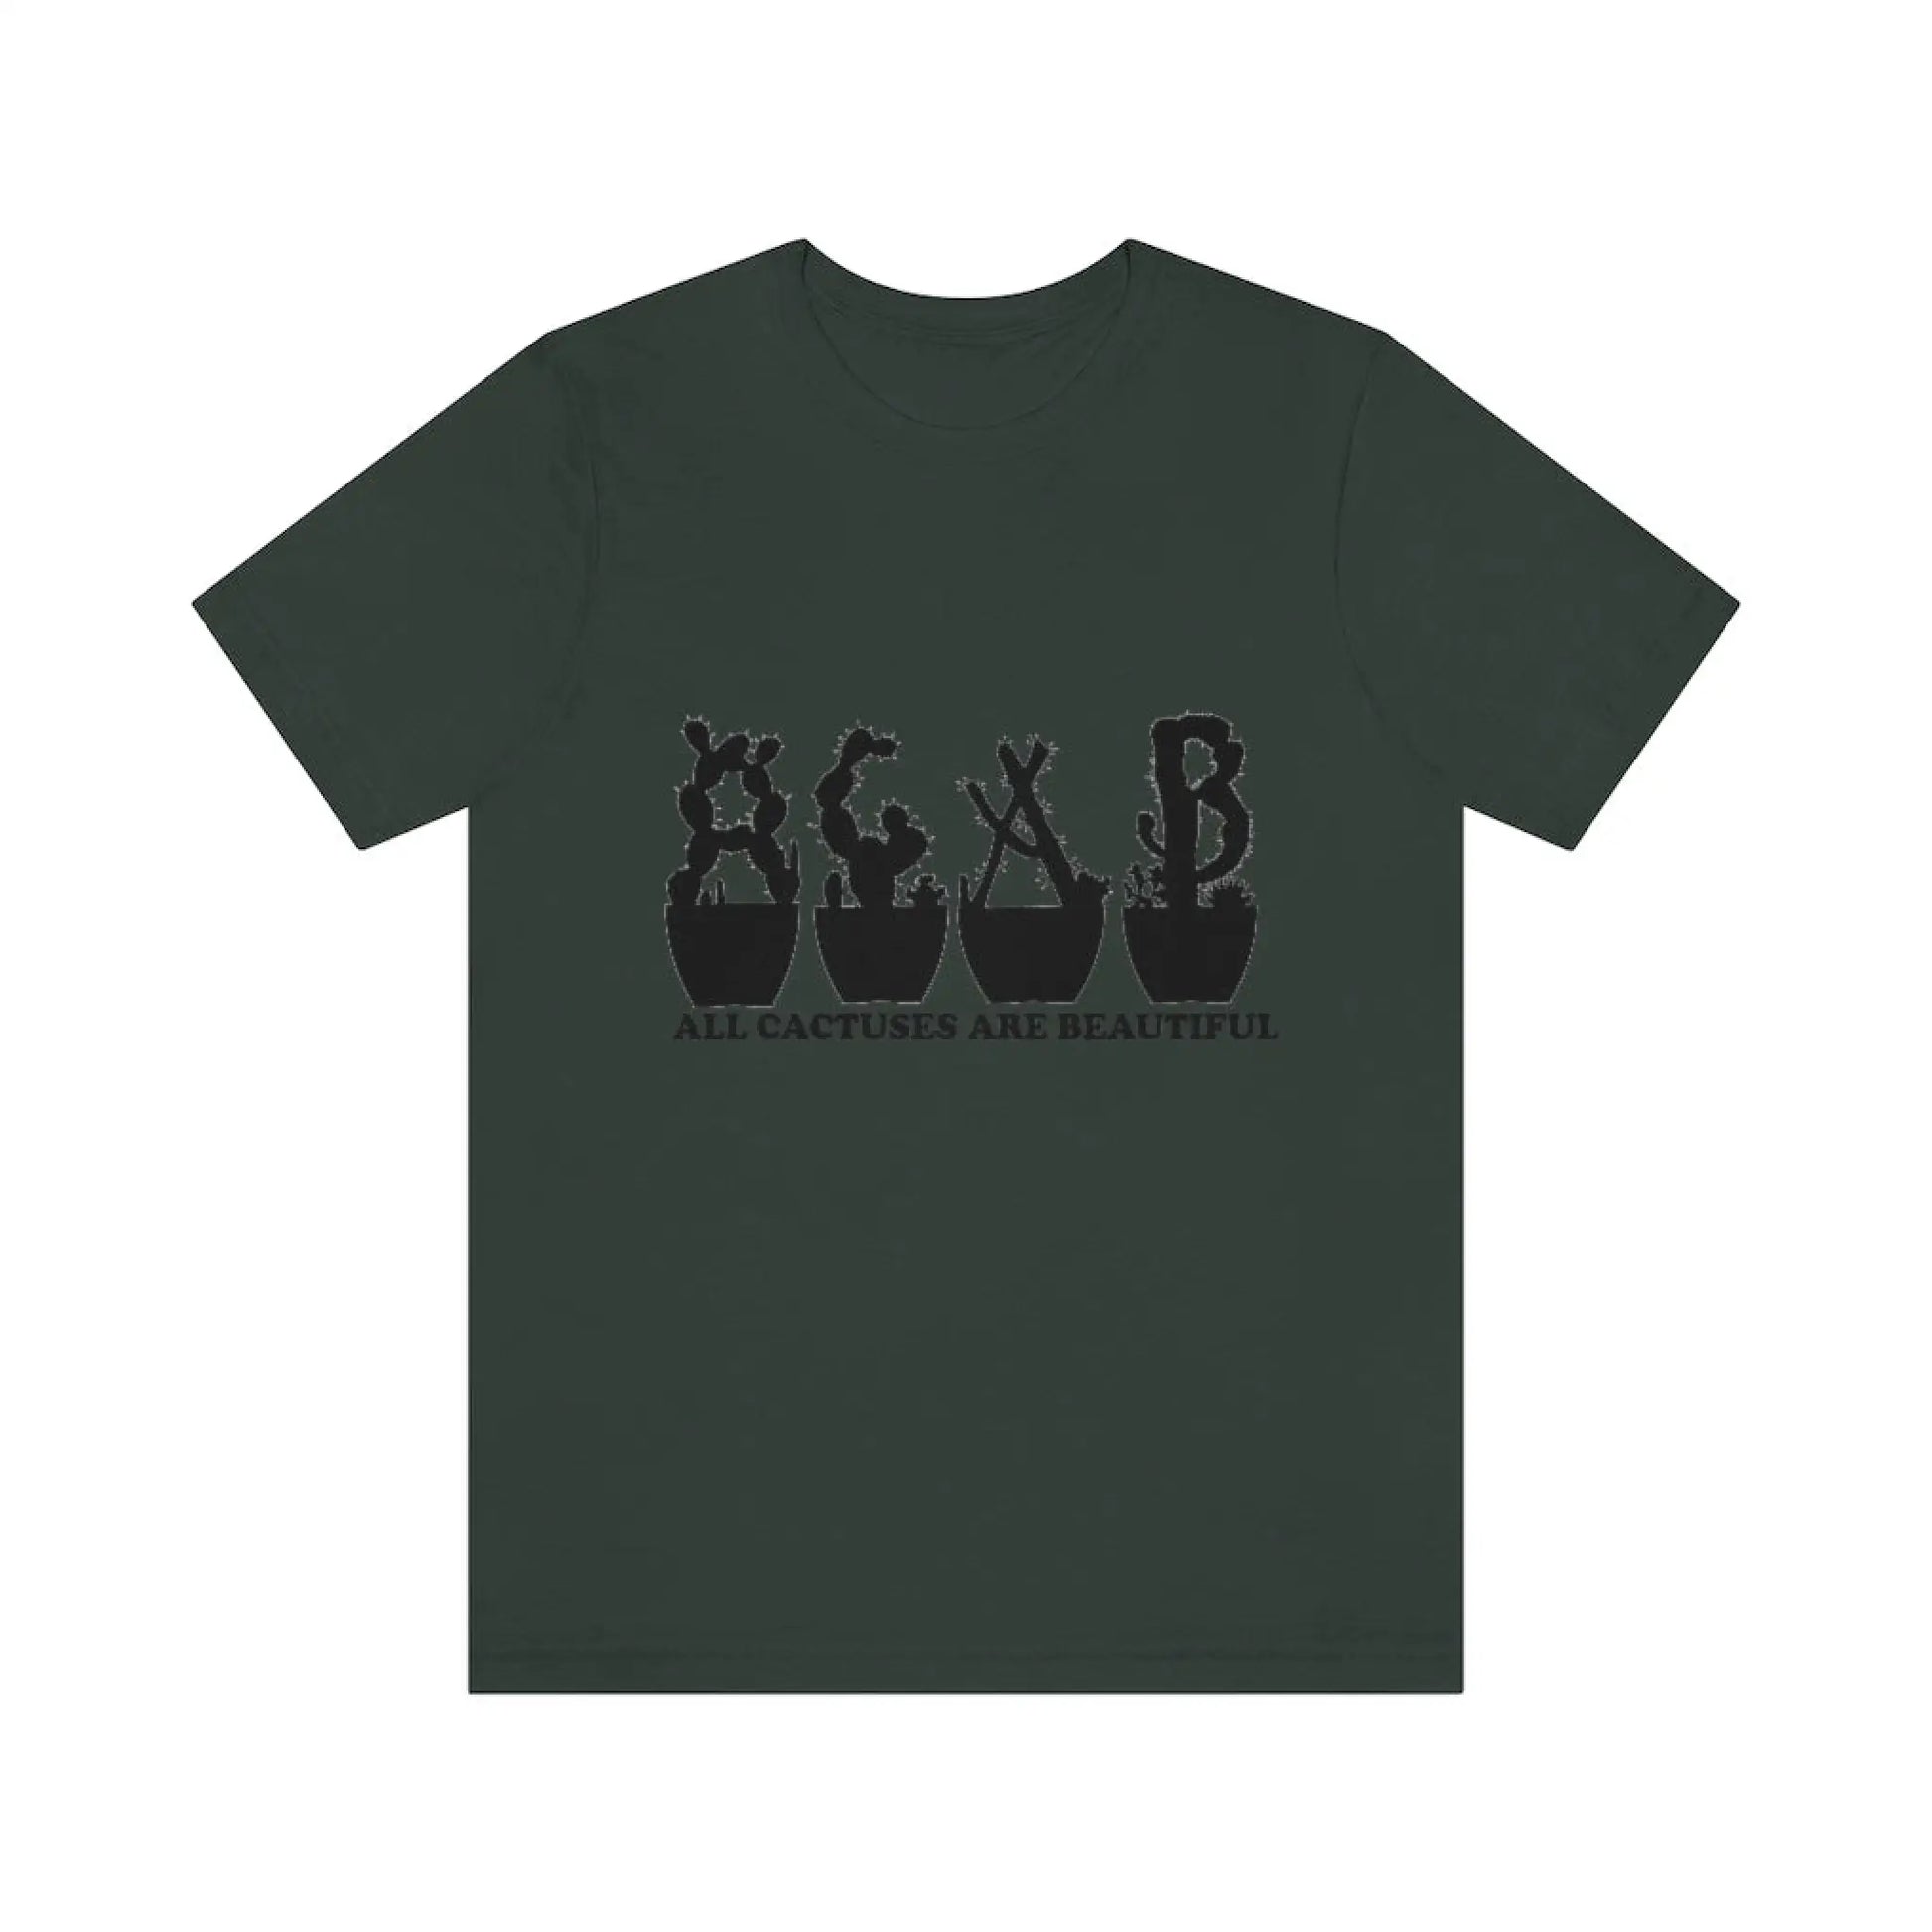 Shirts XL - All Cactuses Are Beautiful - Dark Grey / T-Shirt